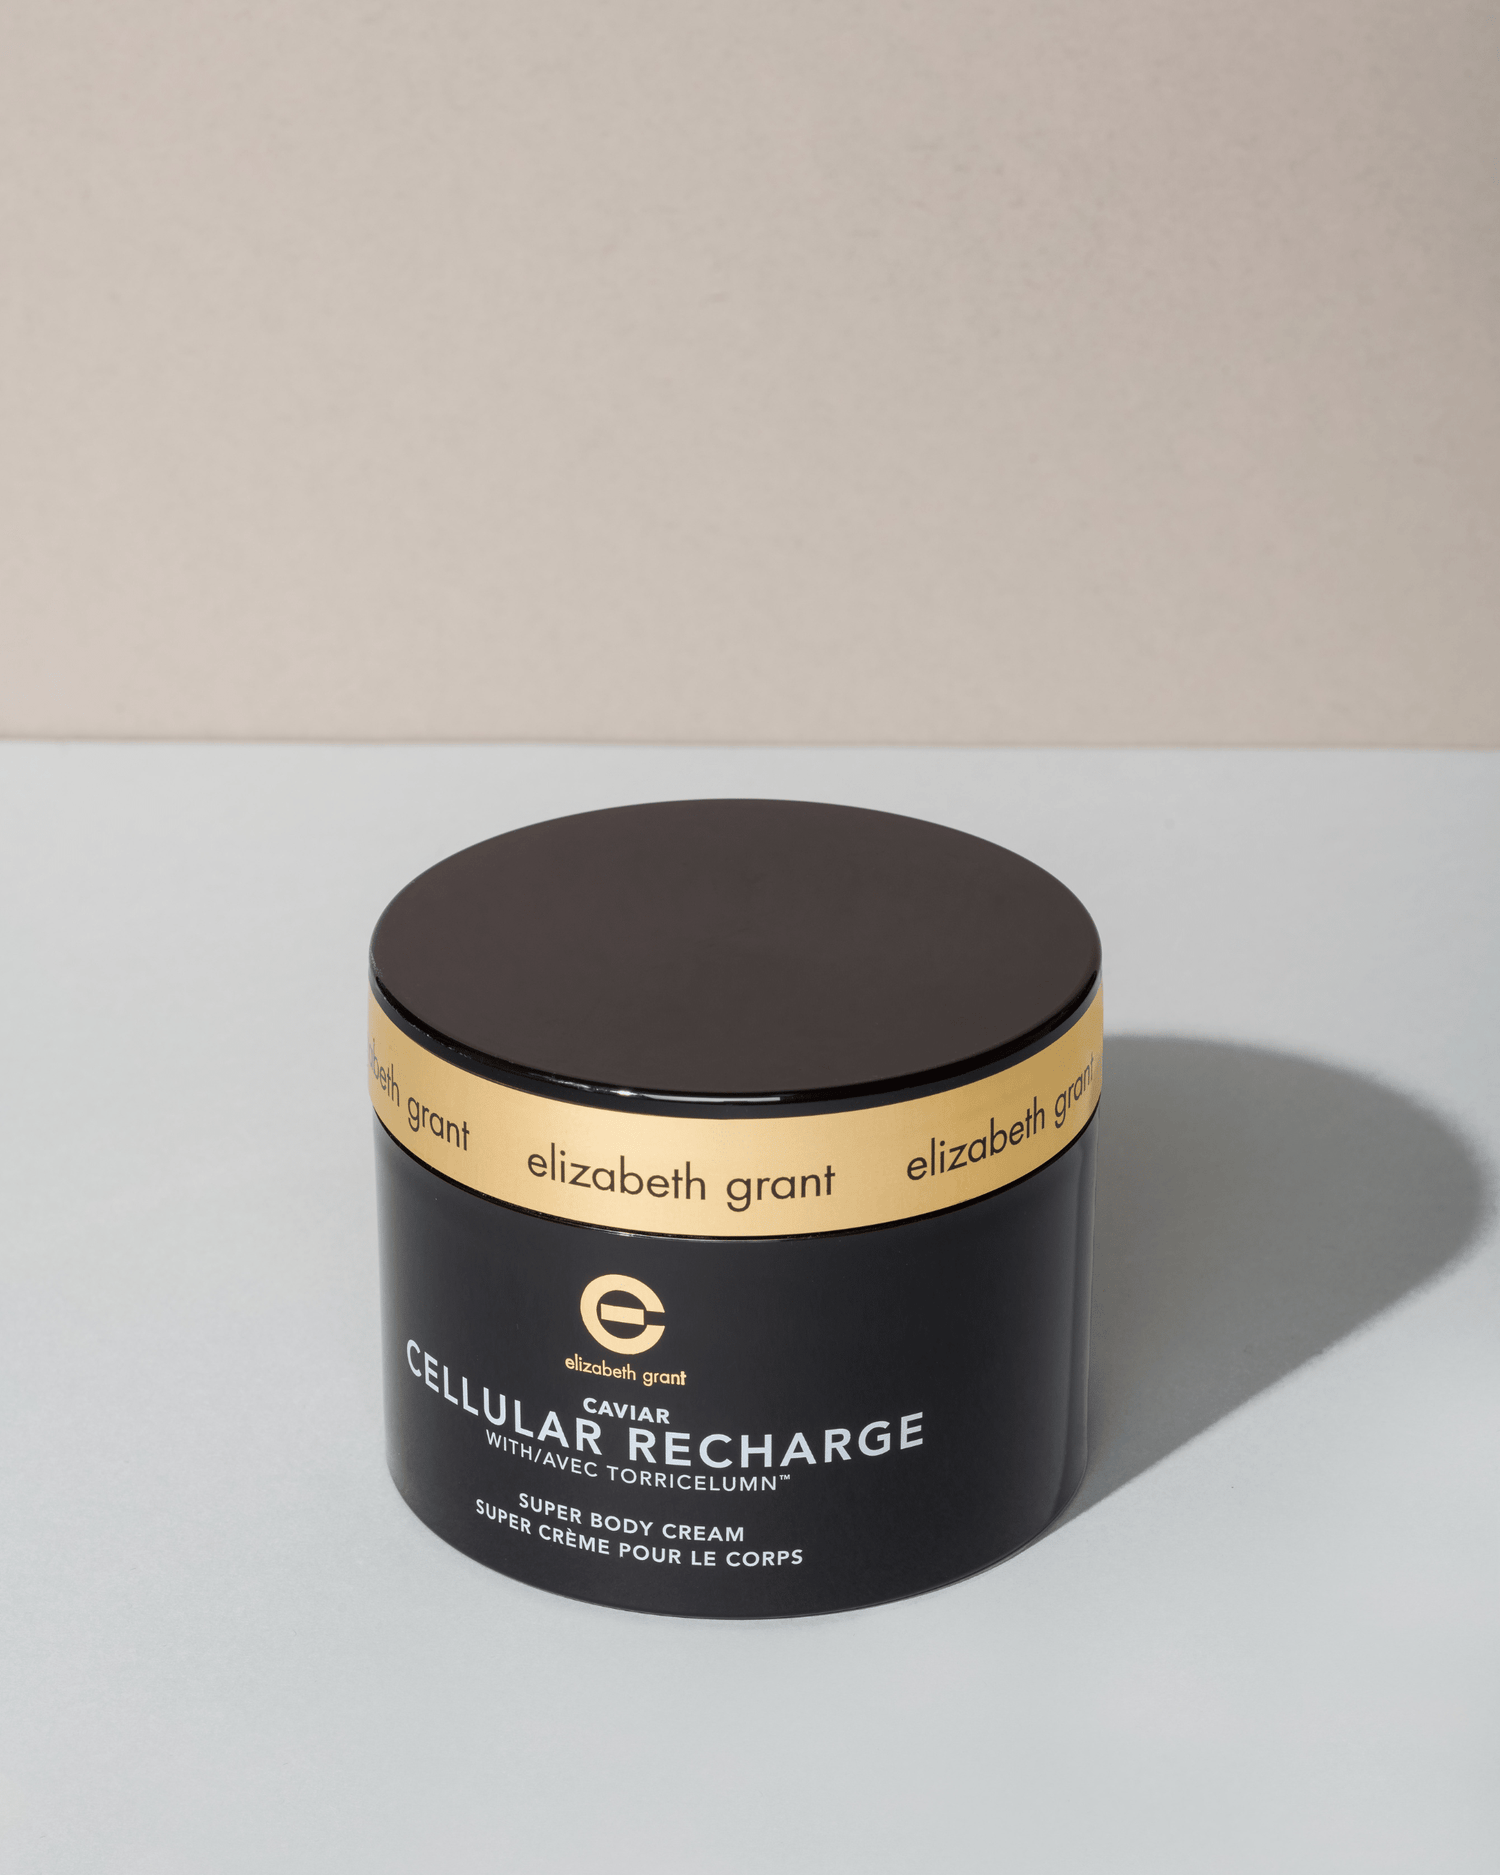 Elizabeth Grant Skin Care Caviar Cellular Recharge Super Body Cream